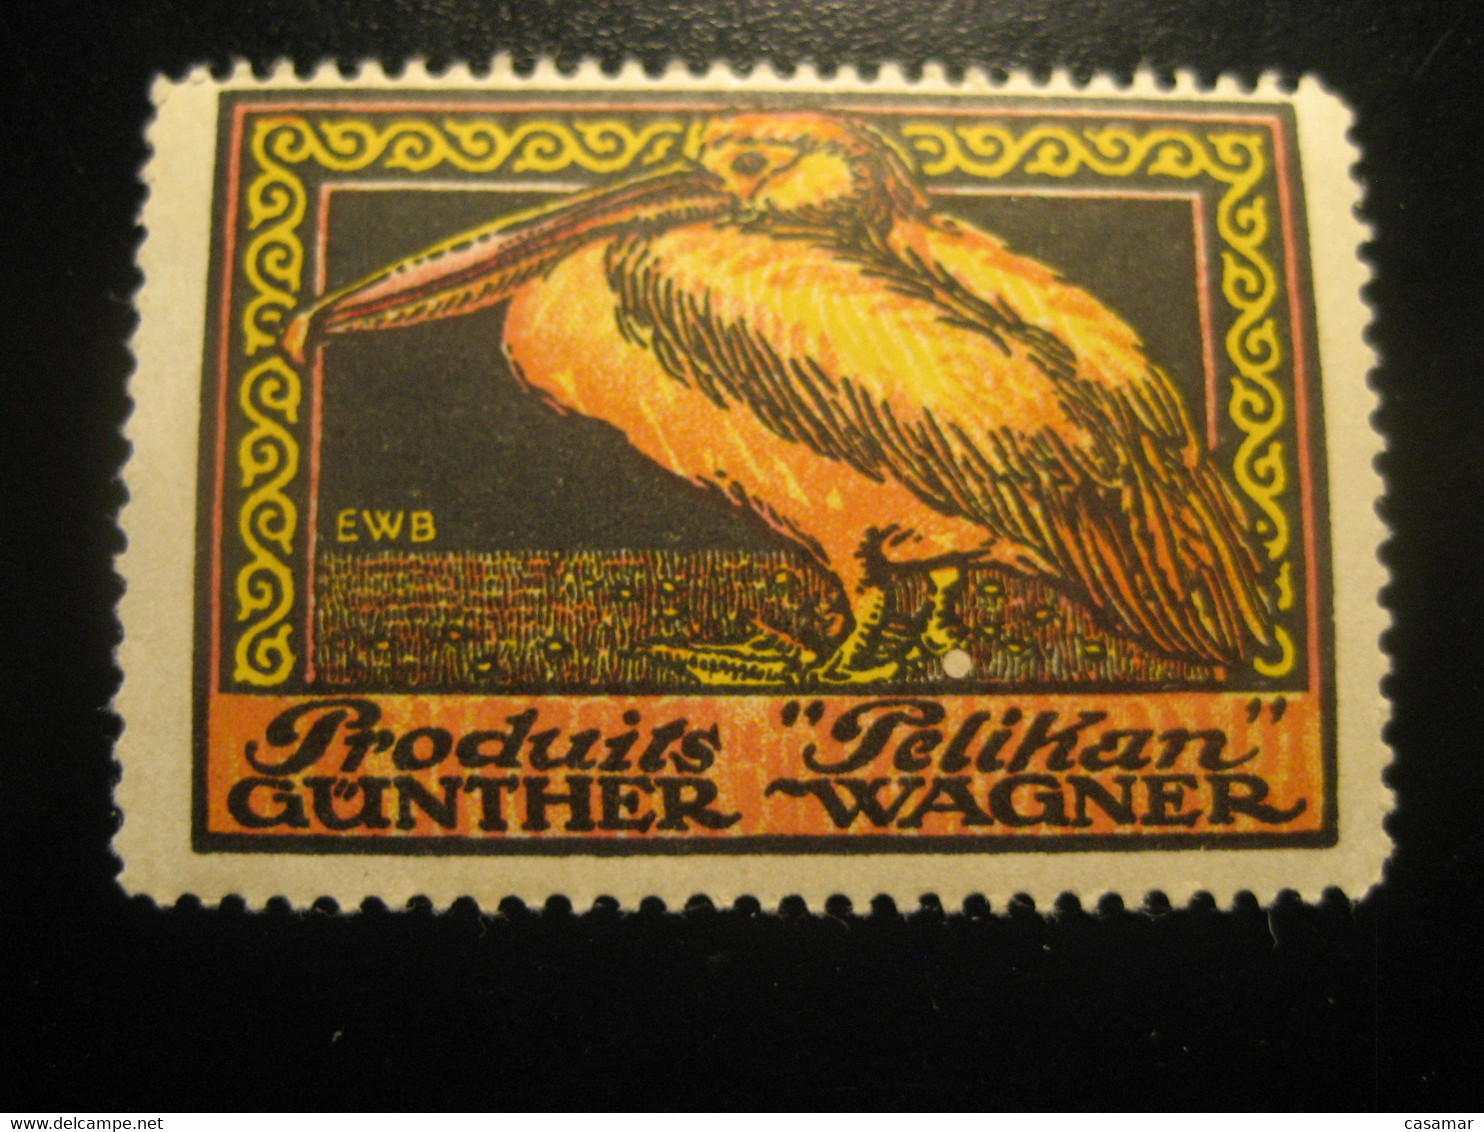 Produits PELIKAN Gunther Wagner Pelican Pelicans Bird Birds Oiseaux Poster Stamp Vignette GERMANY Label - Pélicans